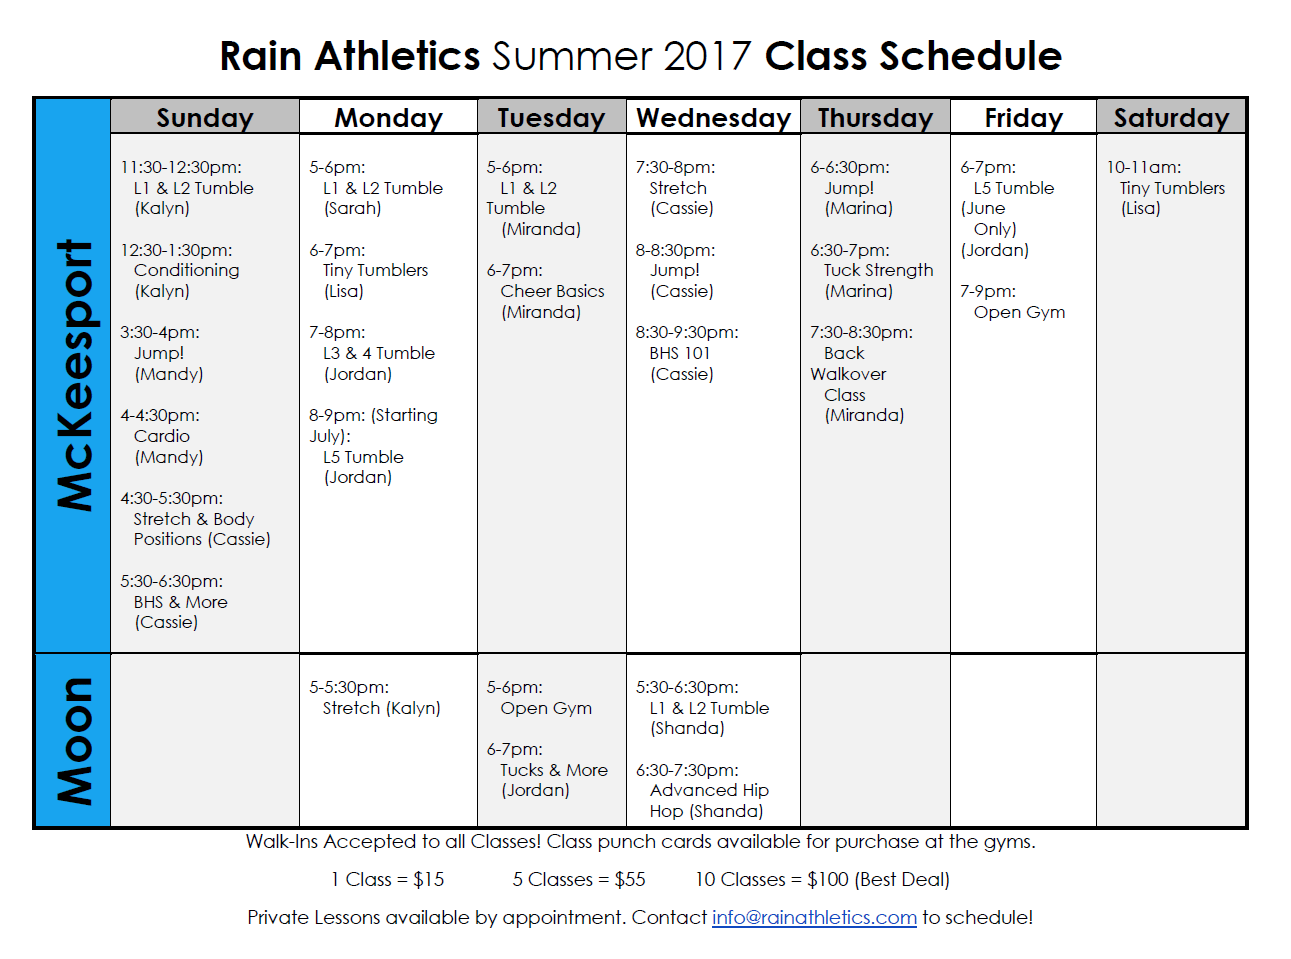 Rain Athletics Summer Class Schedule